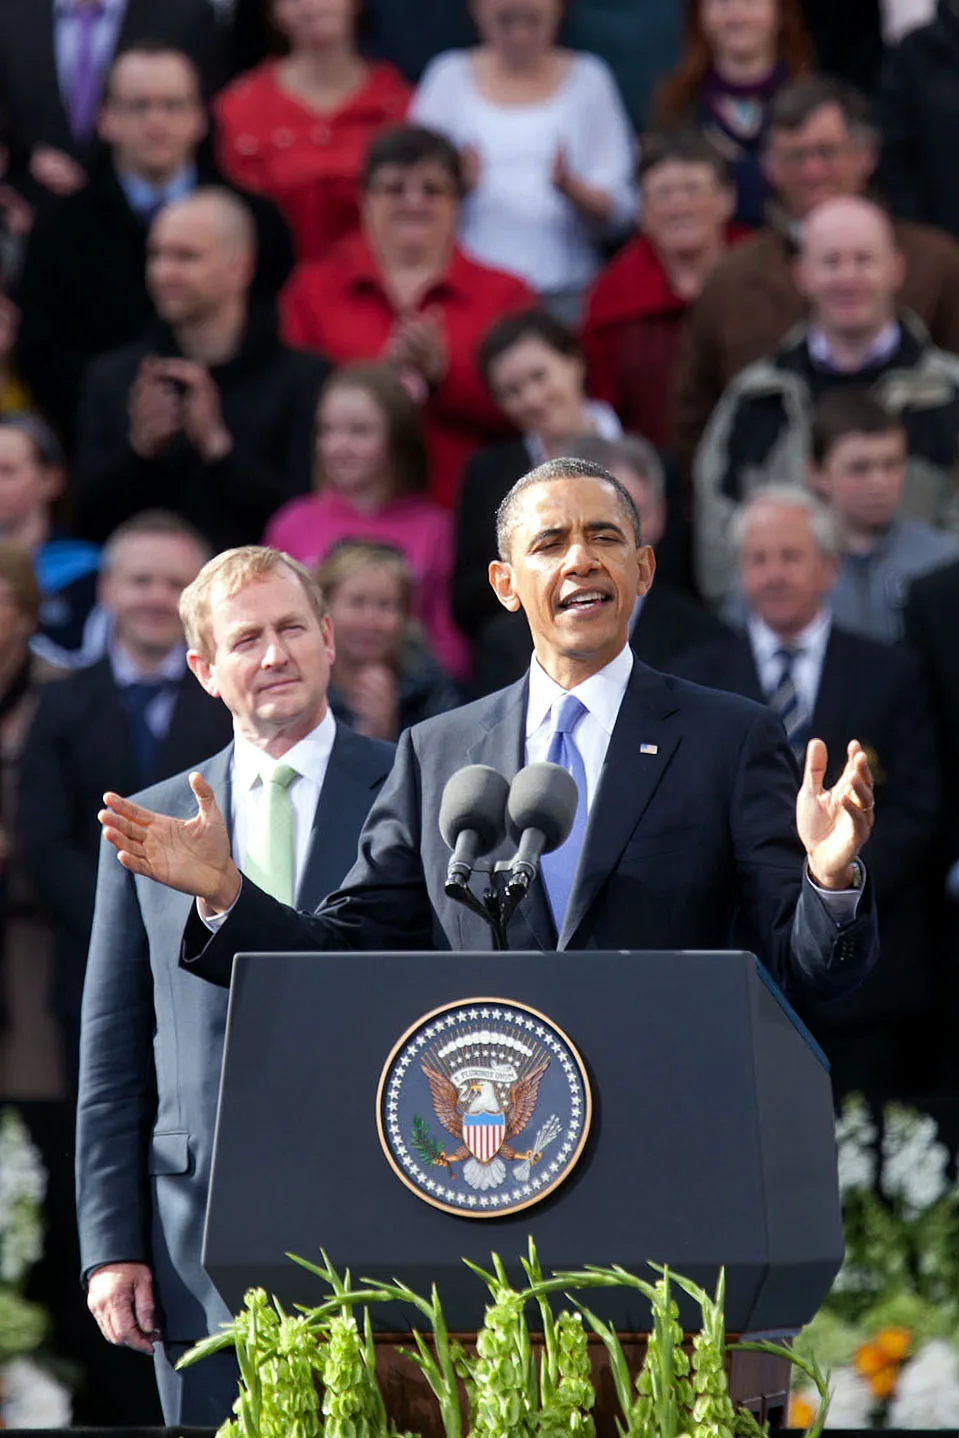 Obama's Speech to the Irish People 2011